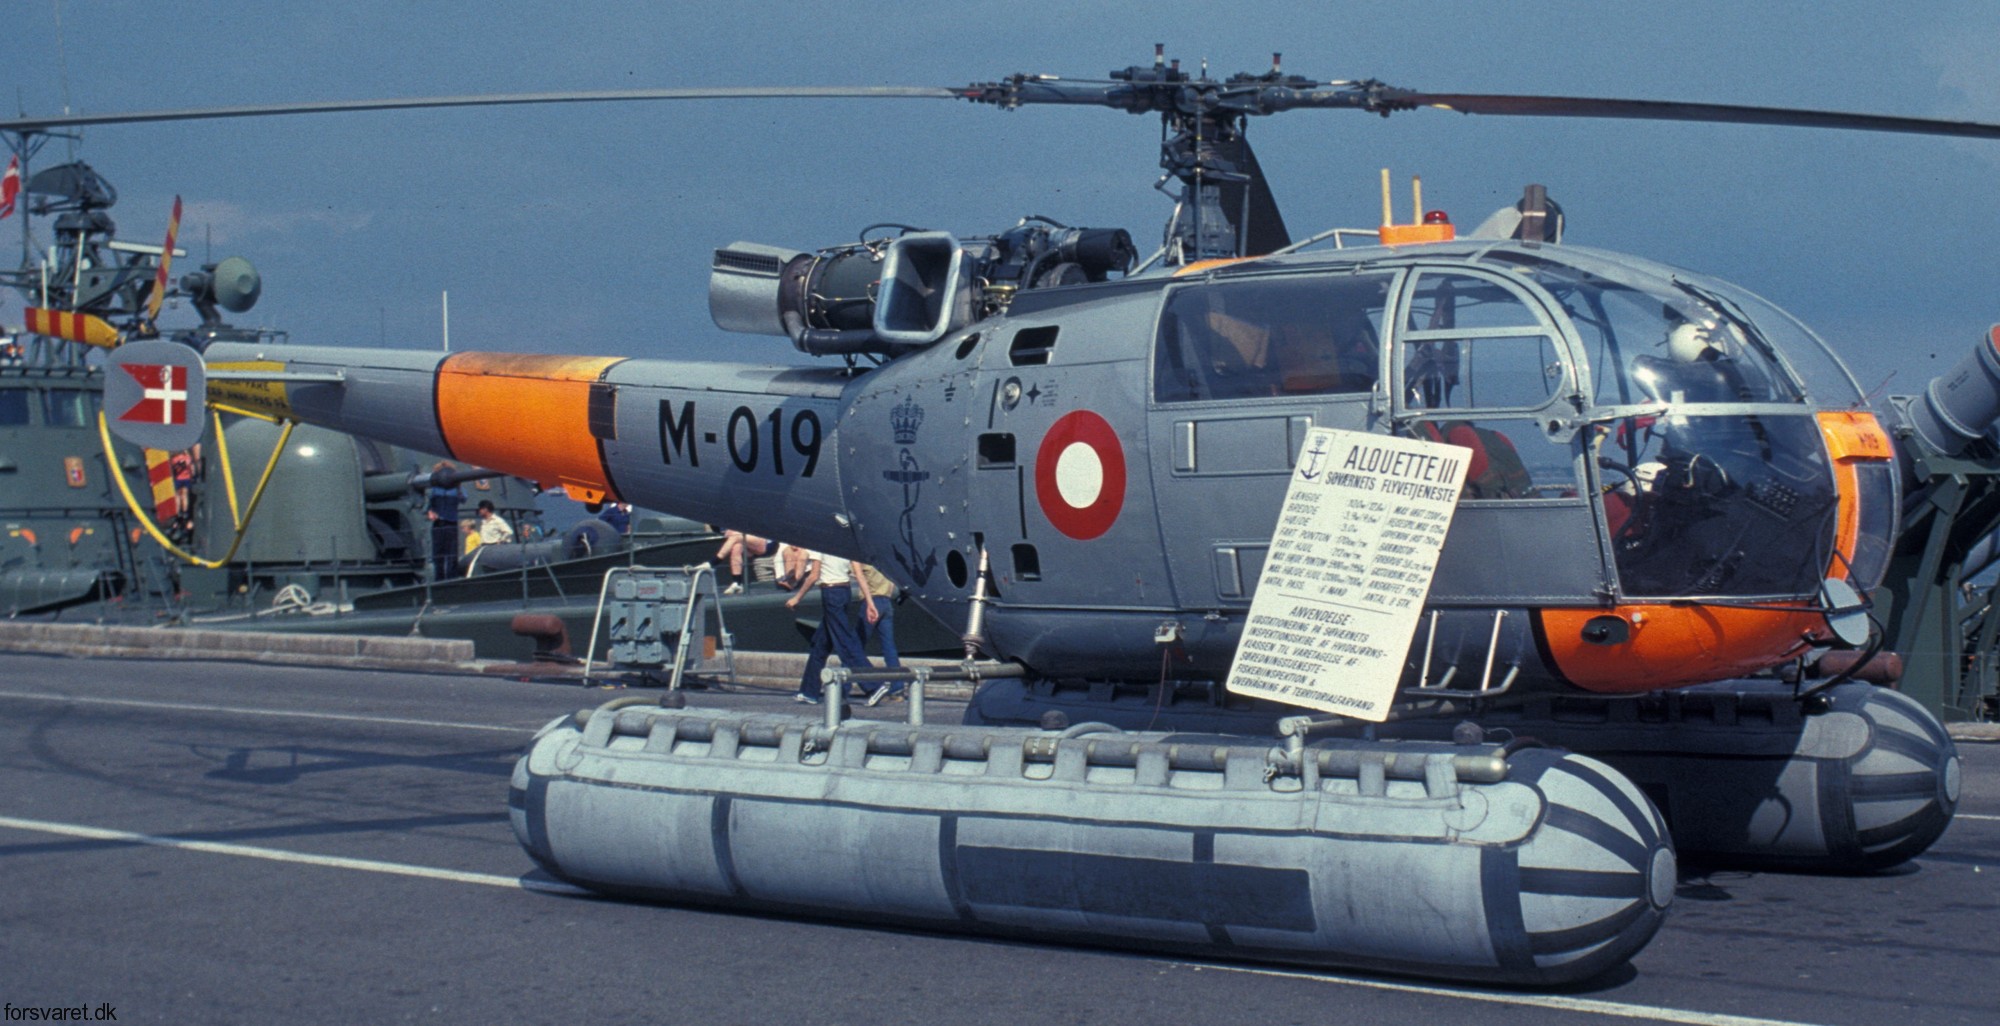 sa 316b alouette iii helicopter royal danish navy søværnet kongelige danske marine sud aviation m-019 03